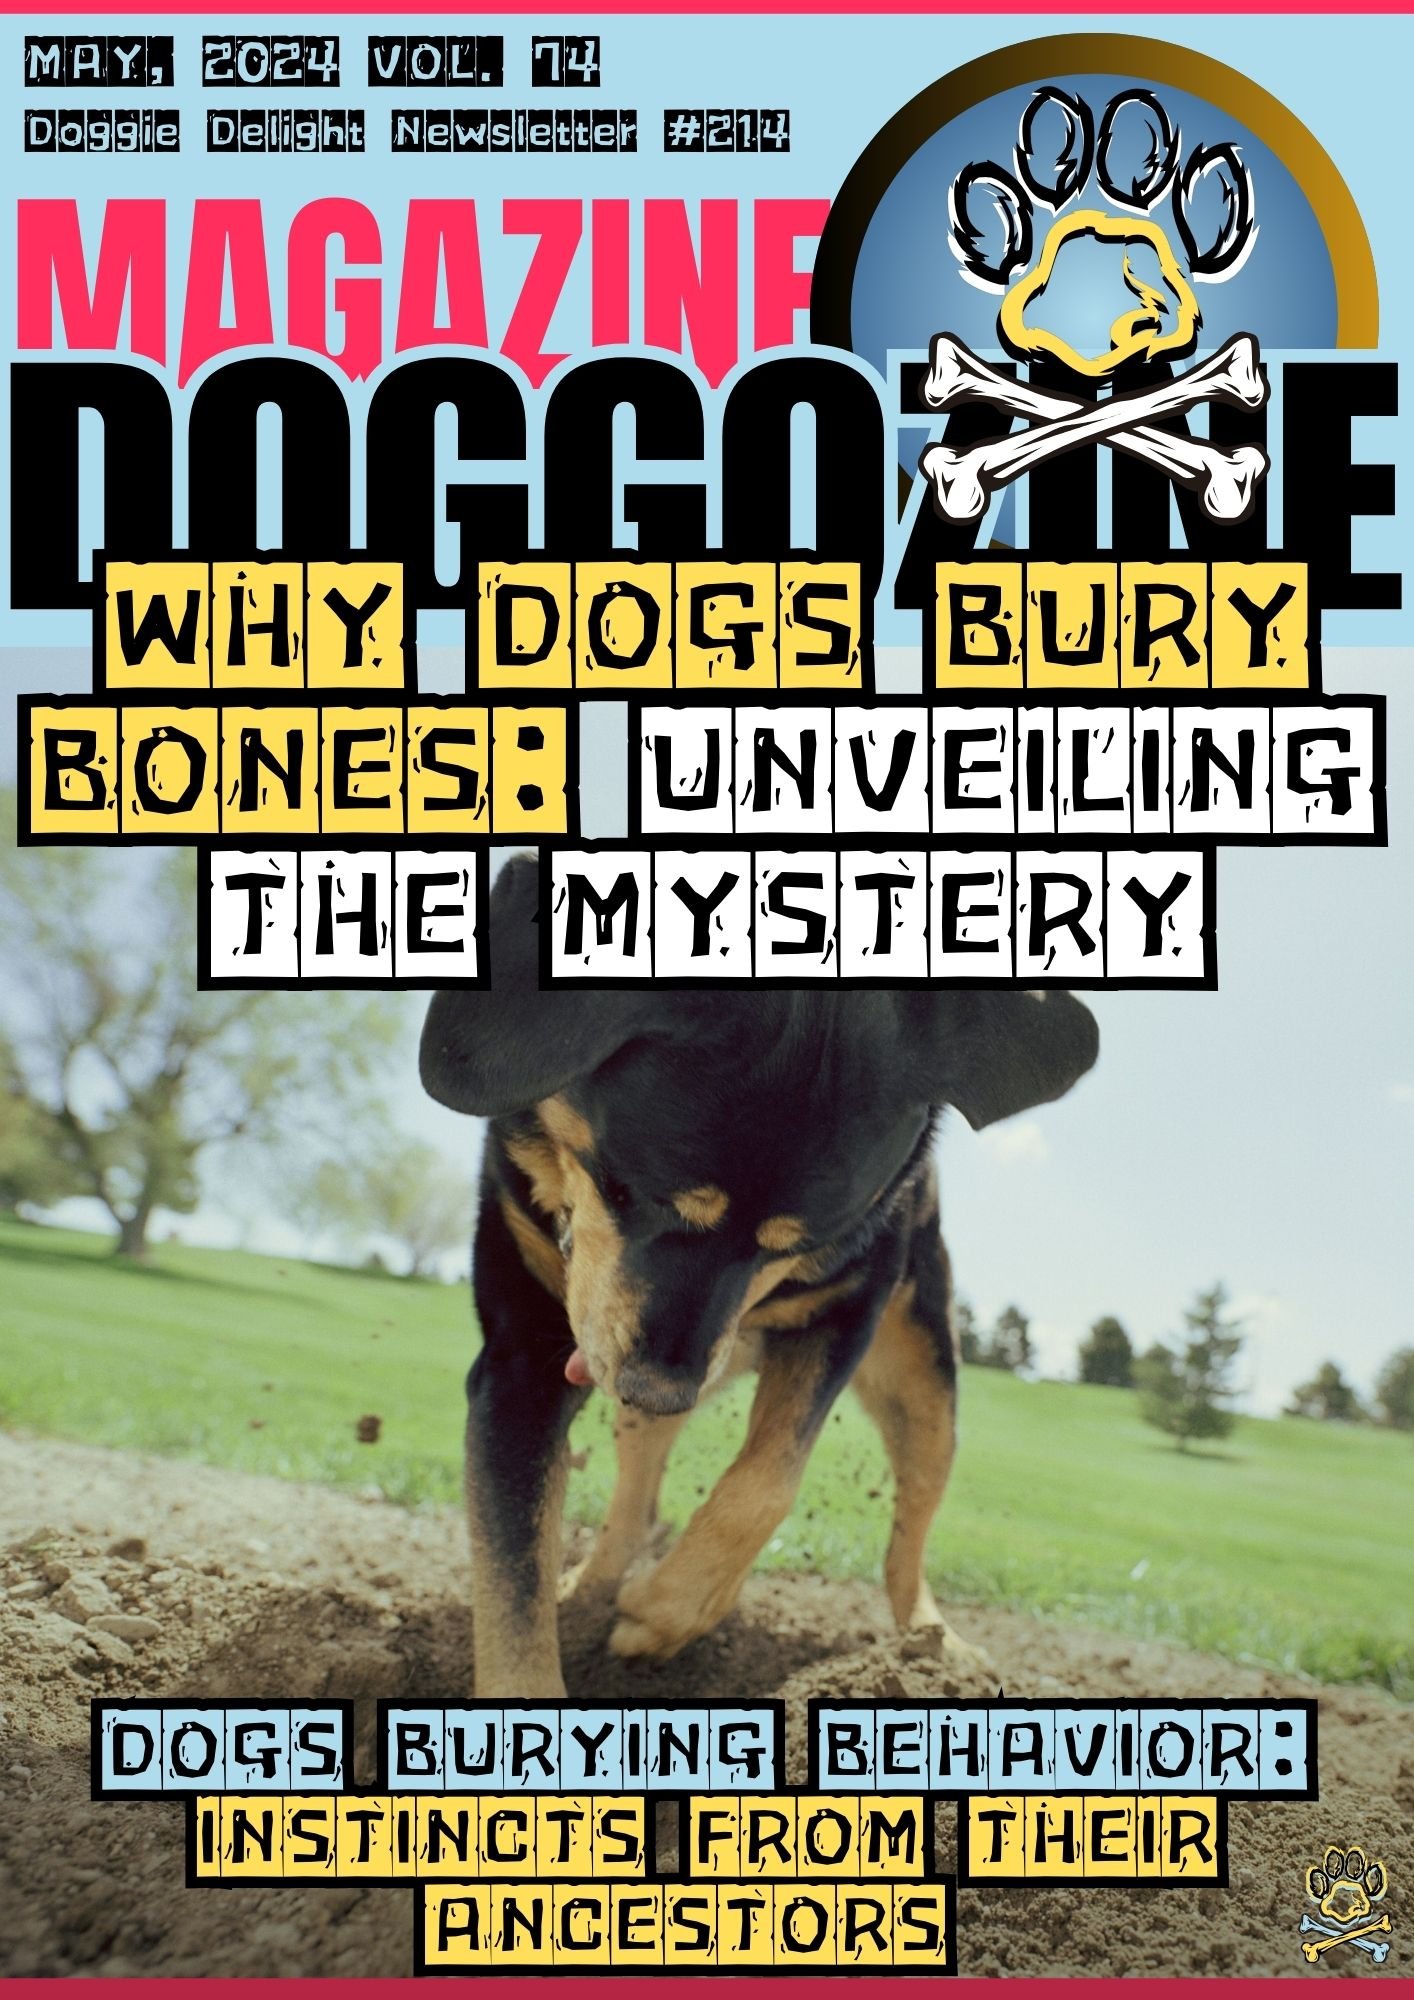 WHY DOGS BURY BONES